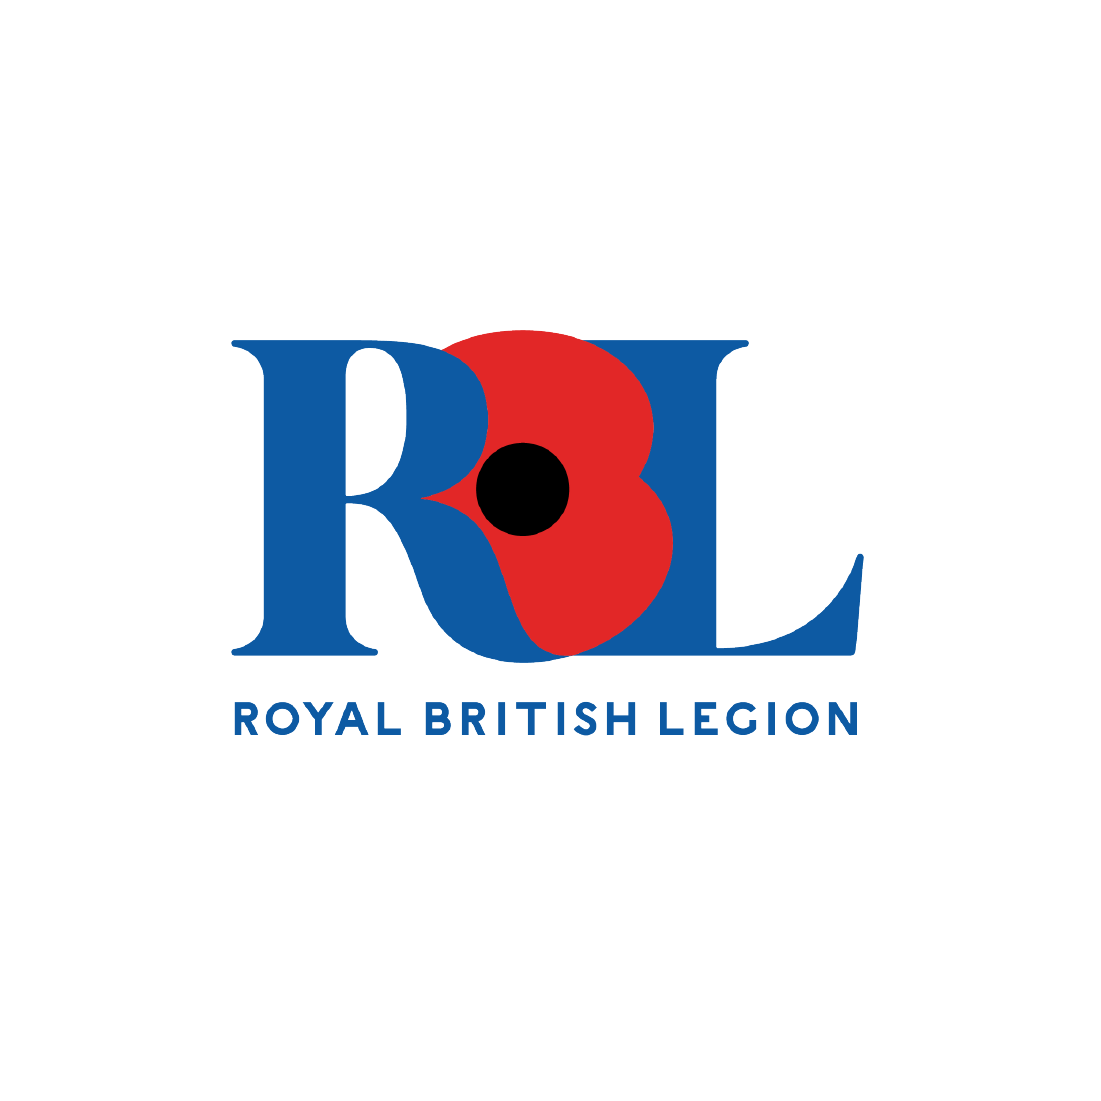 the Royal British Legion logo